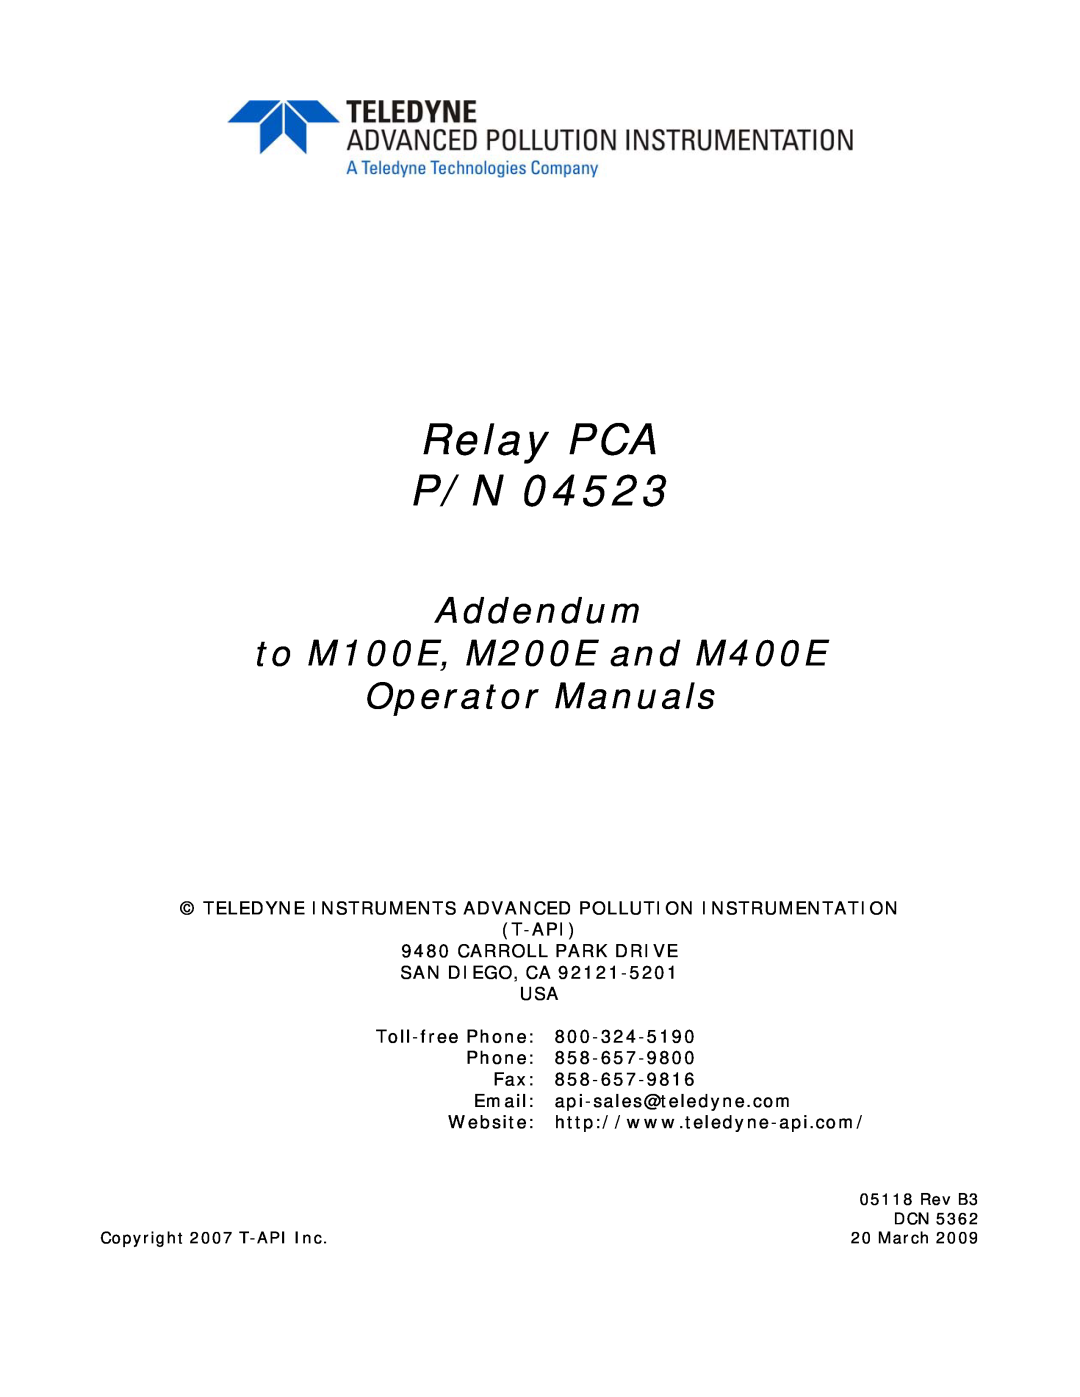 Teledyne M100E manual Teledyne Instruments Advanced Pollution Instrumentation T-Api, Email api-sales@teledyne.com, Rev B3 